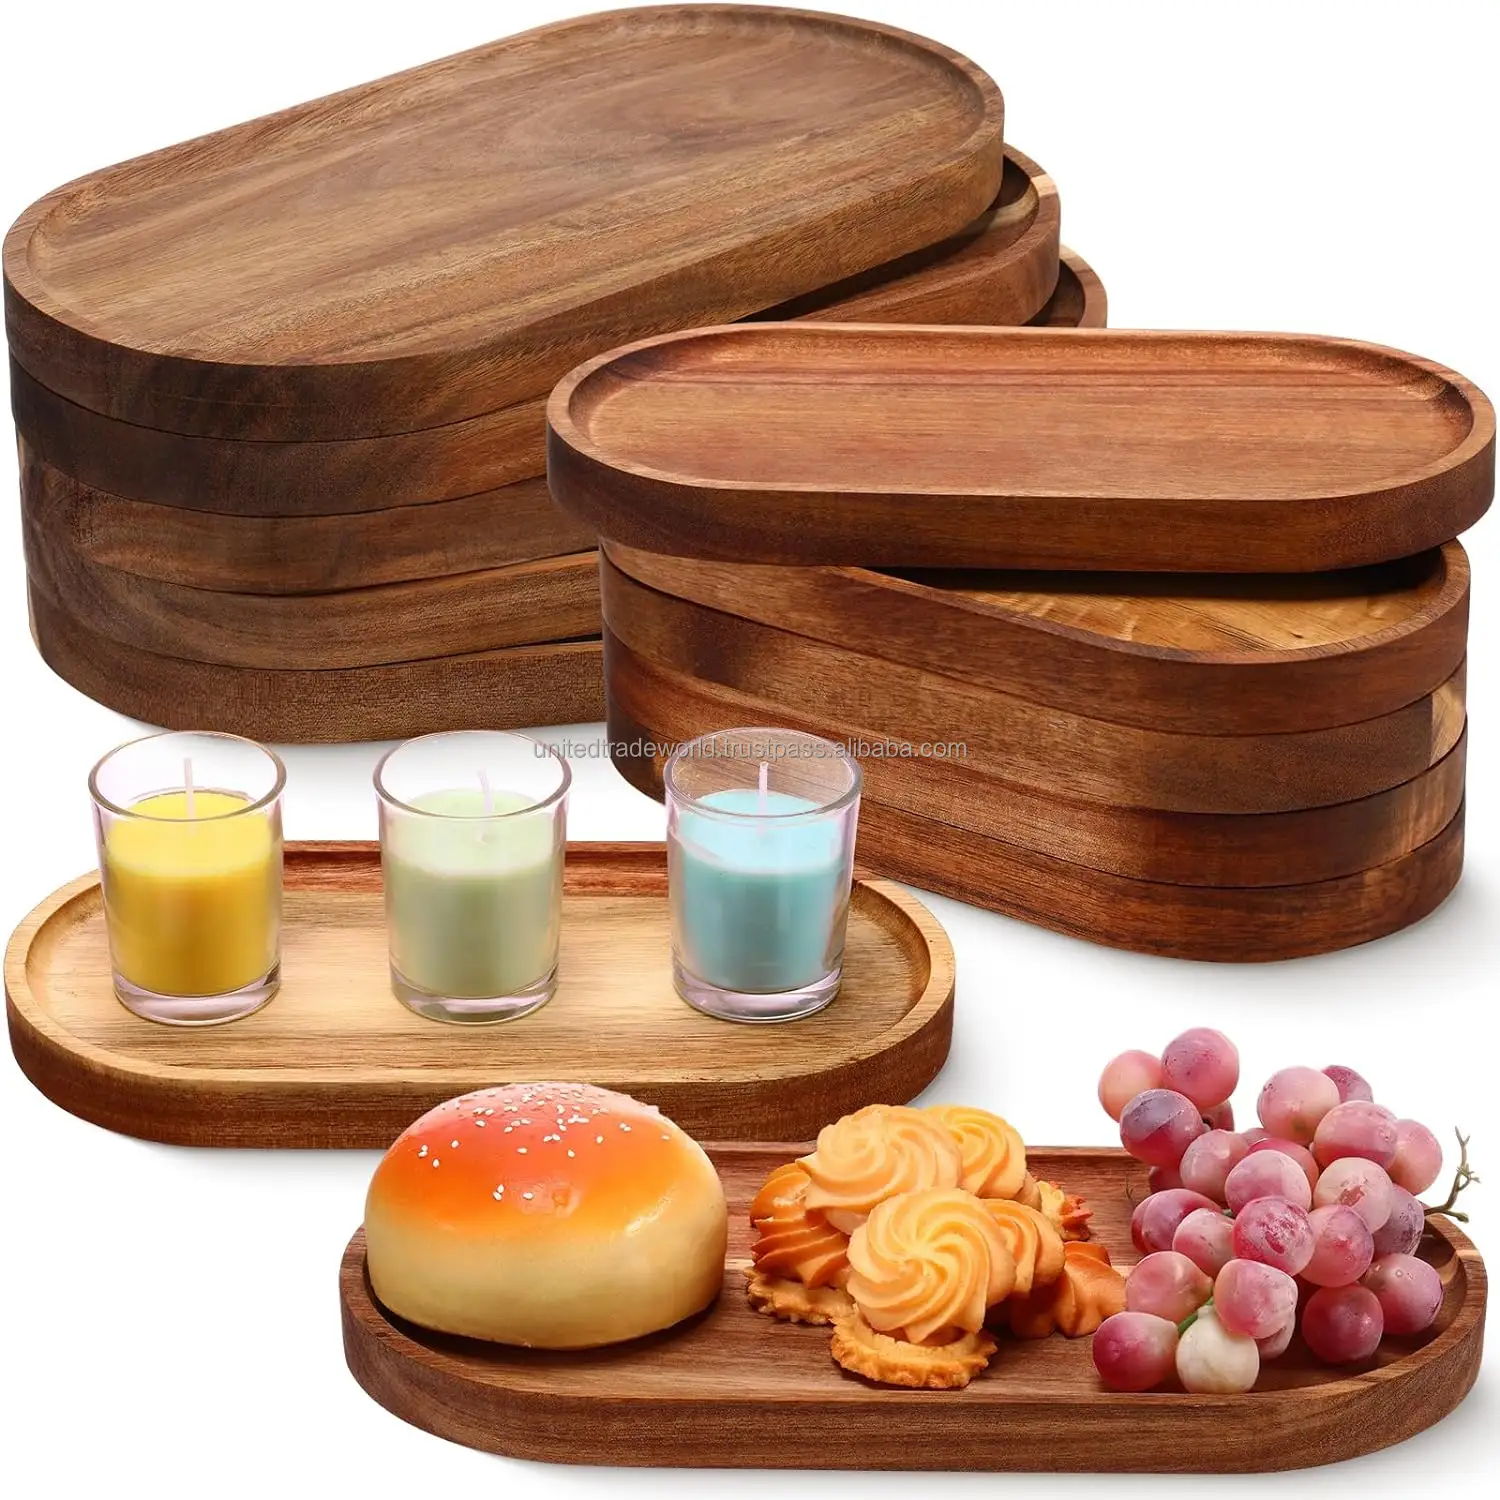 Acacia Wooden Serviert abletts 12 und 10 Zoll ovale Holzplatte Charc uterie Cheese Boards Food Dinner Teller von United Trade World